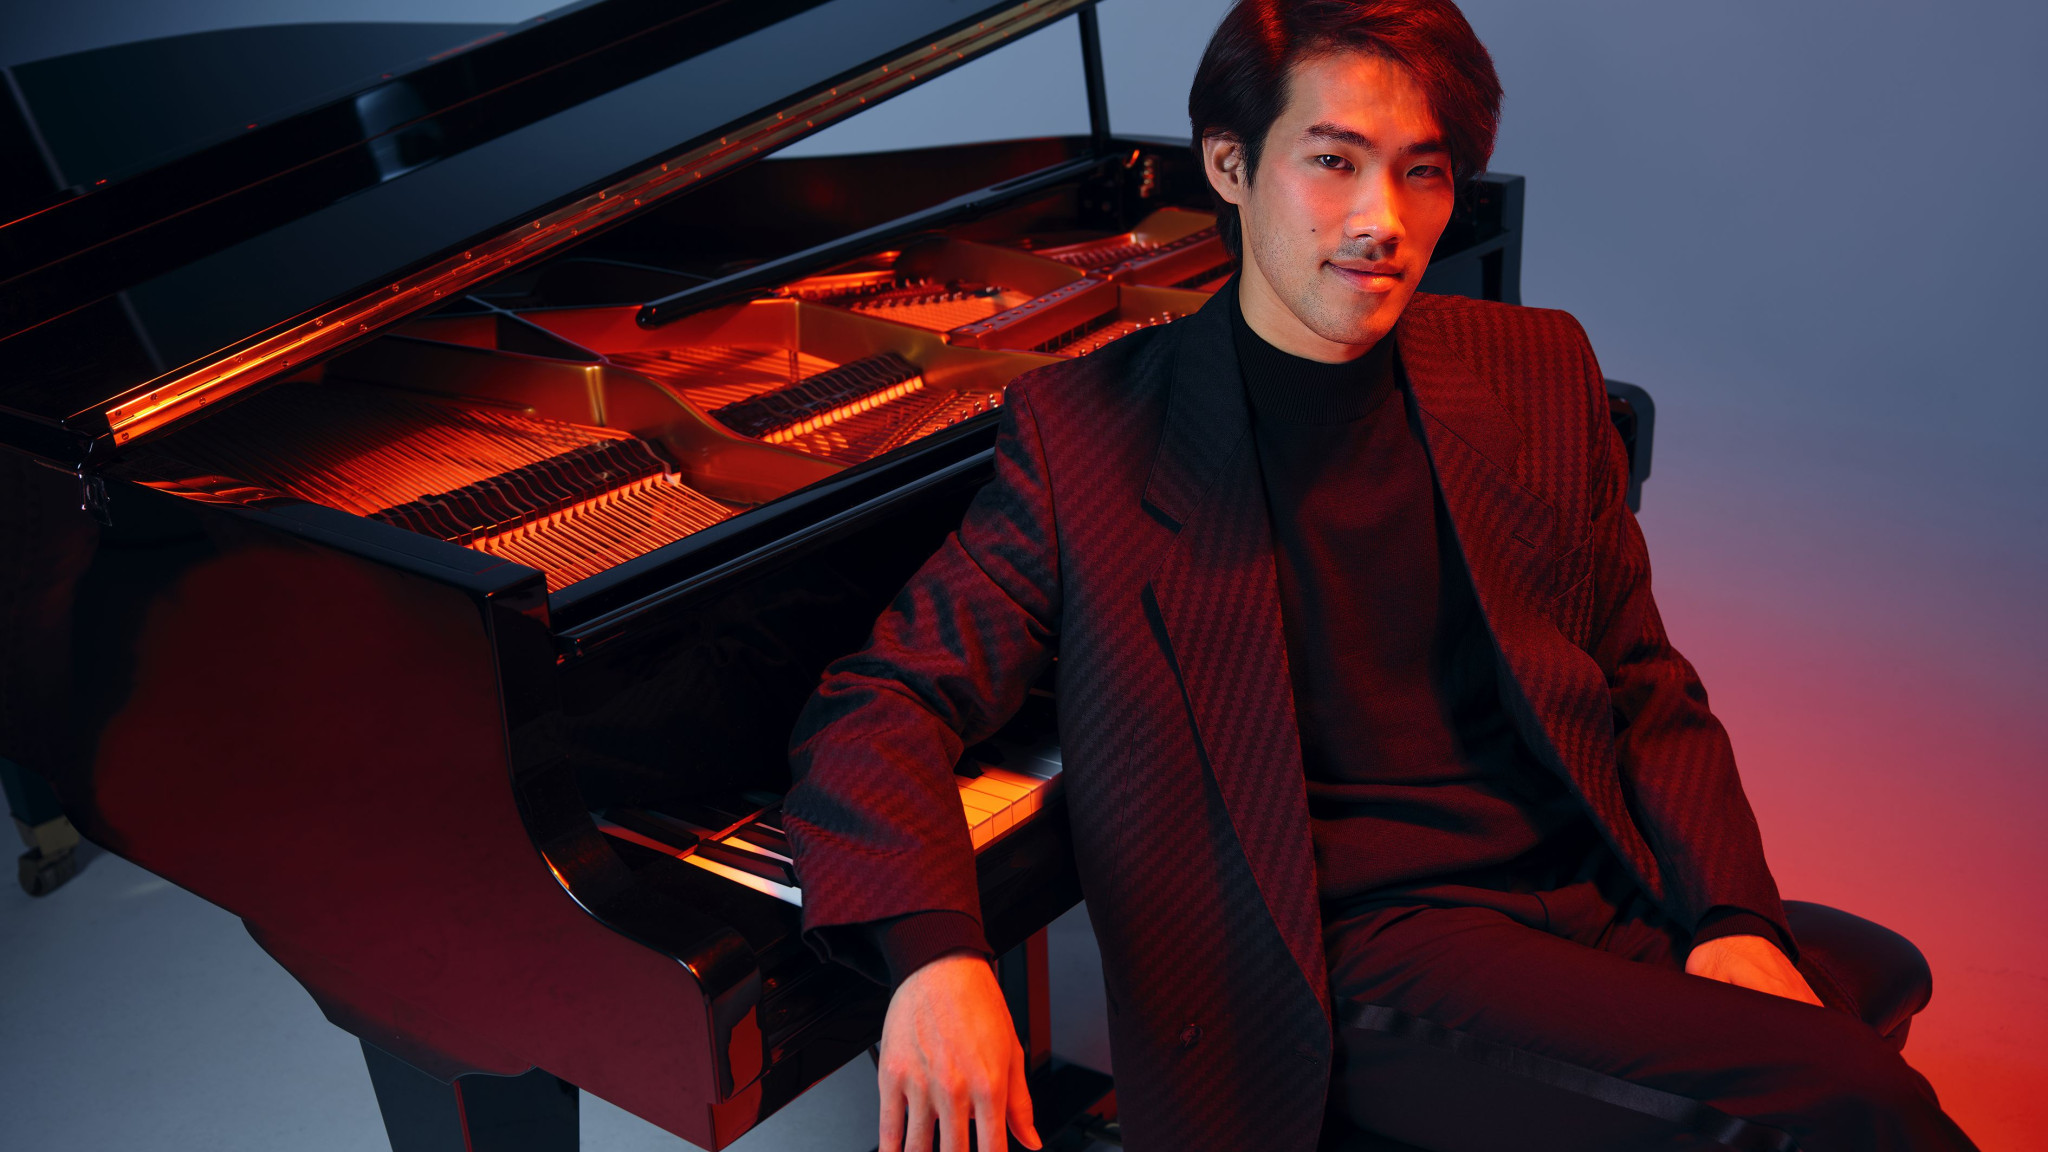 Gewinner des Chopin-Wettbewerbs kündigt erstes Studioalbum an